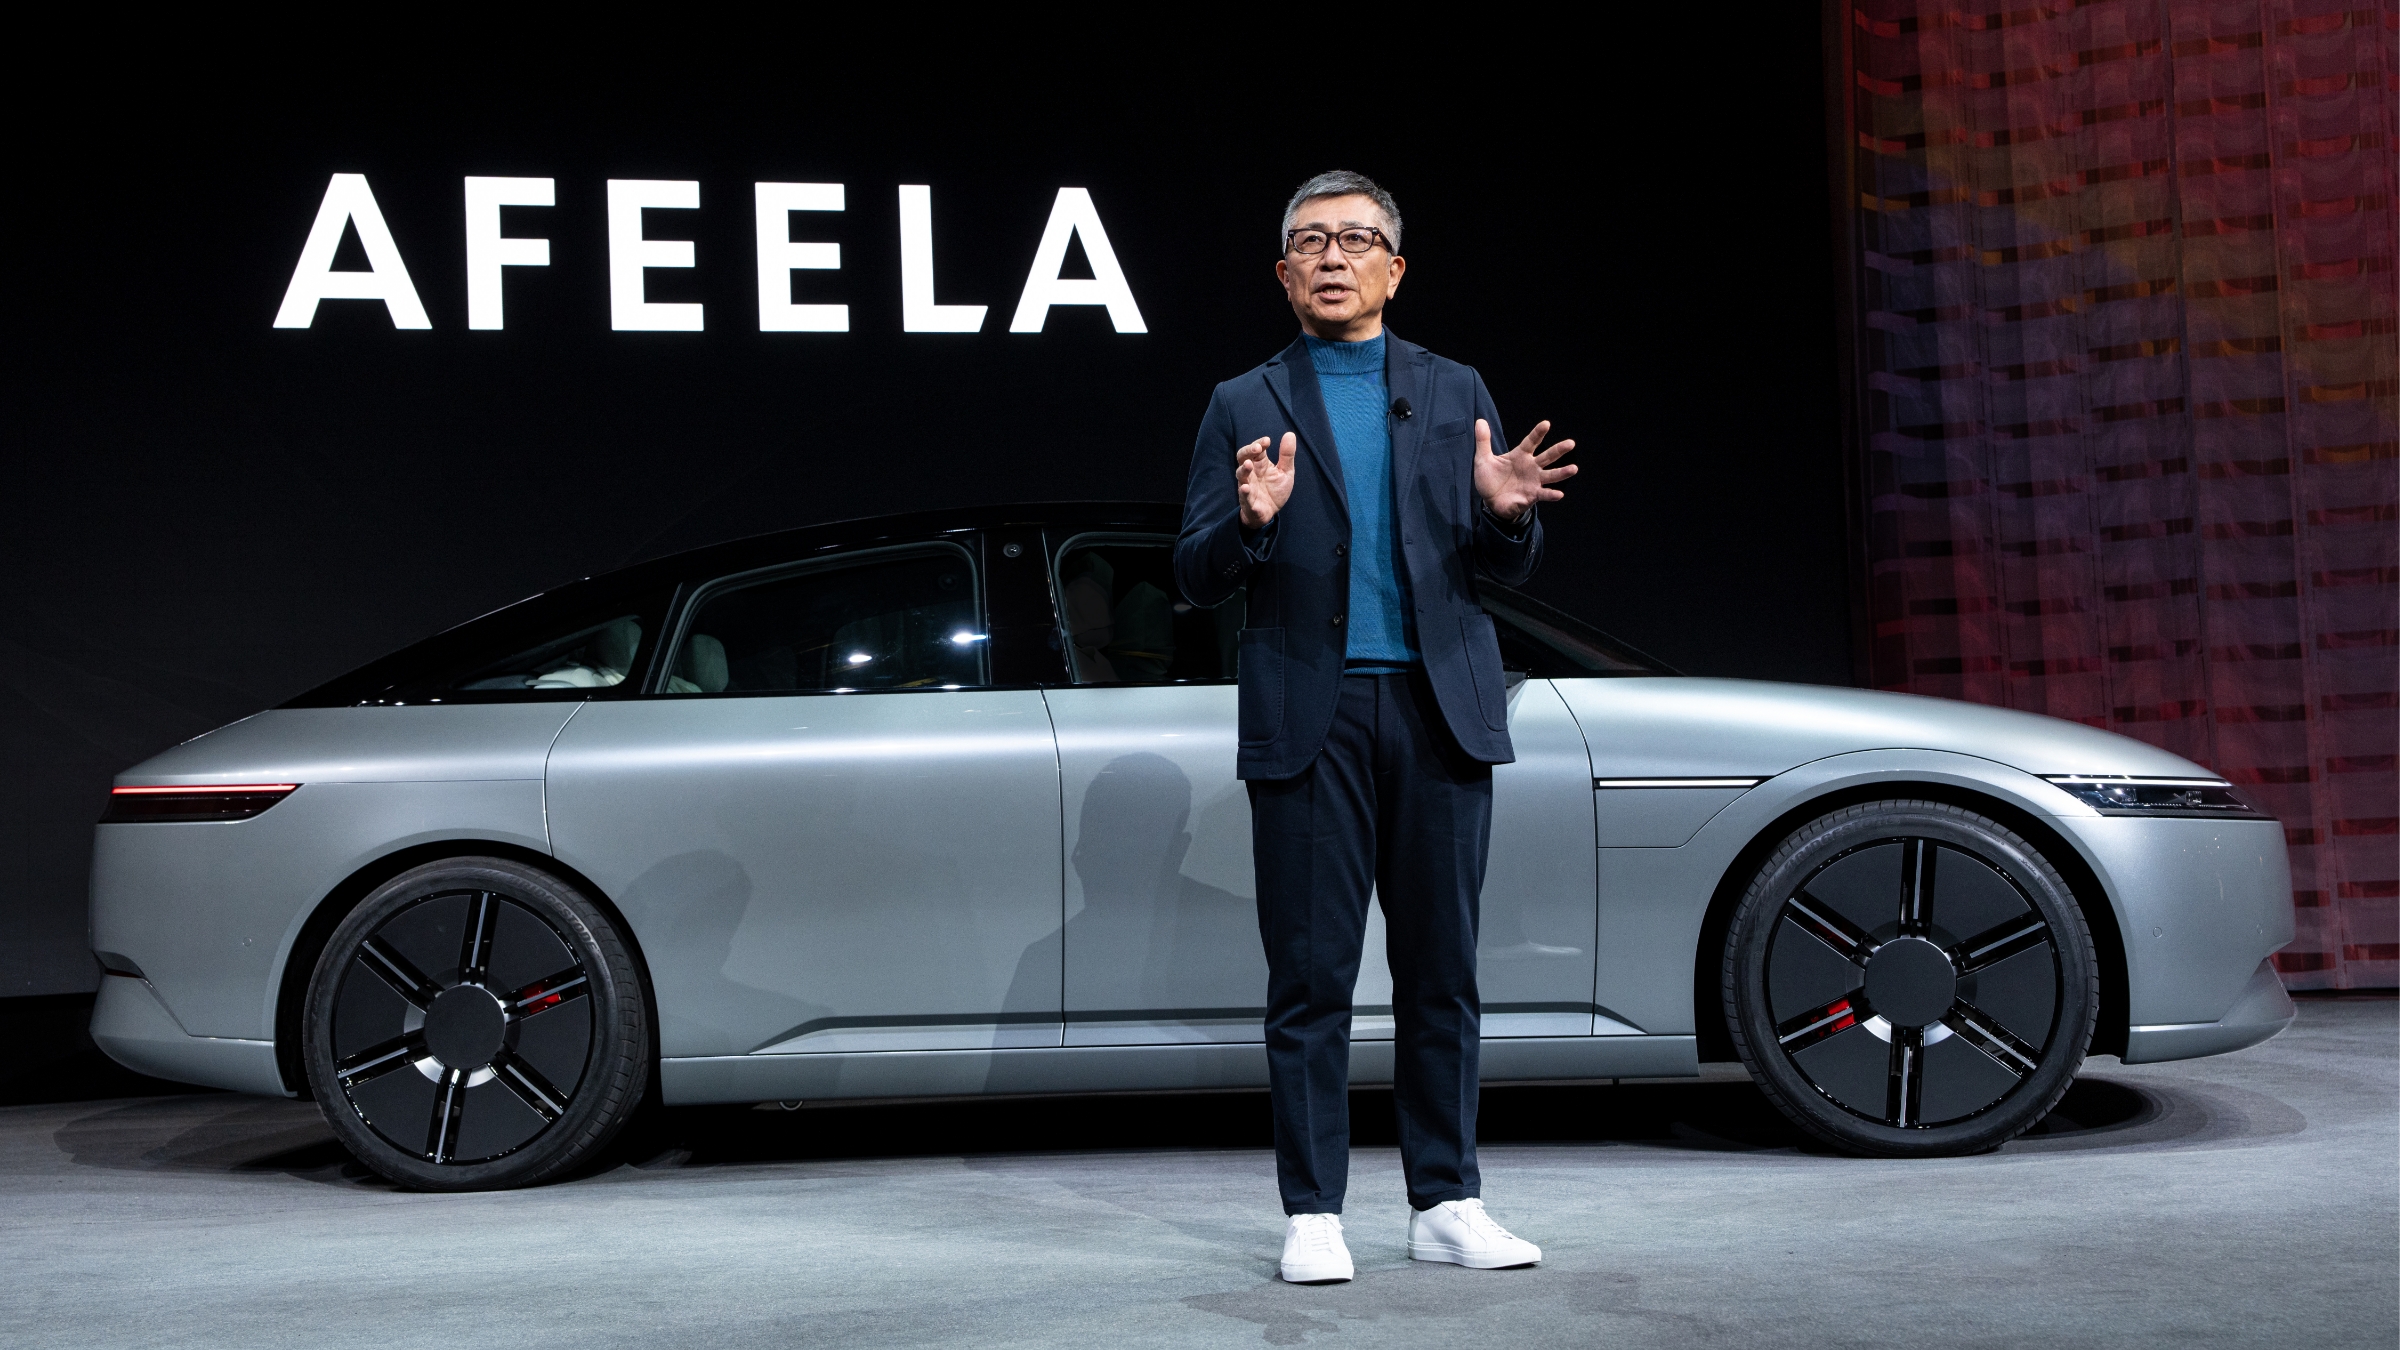 Sony, Honda Together Launch Autonomous Electric Car Brand AFEELA